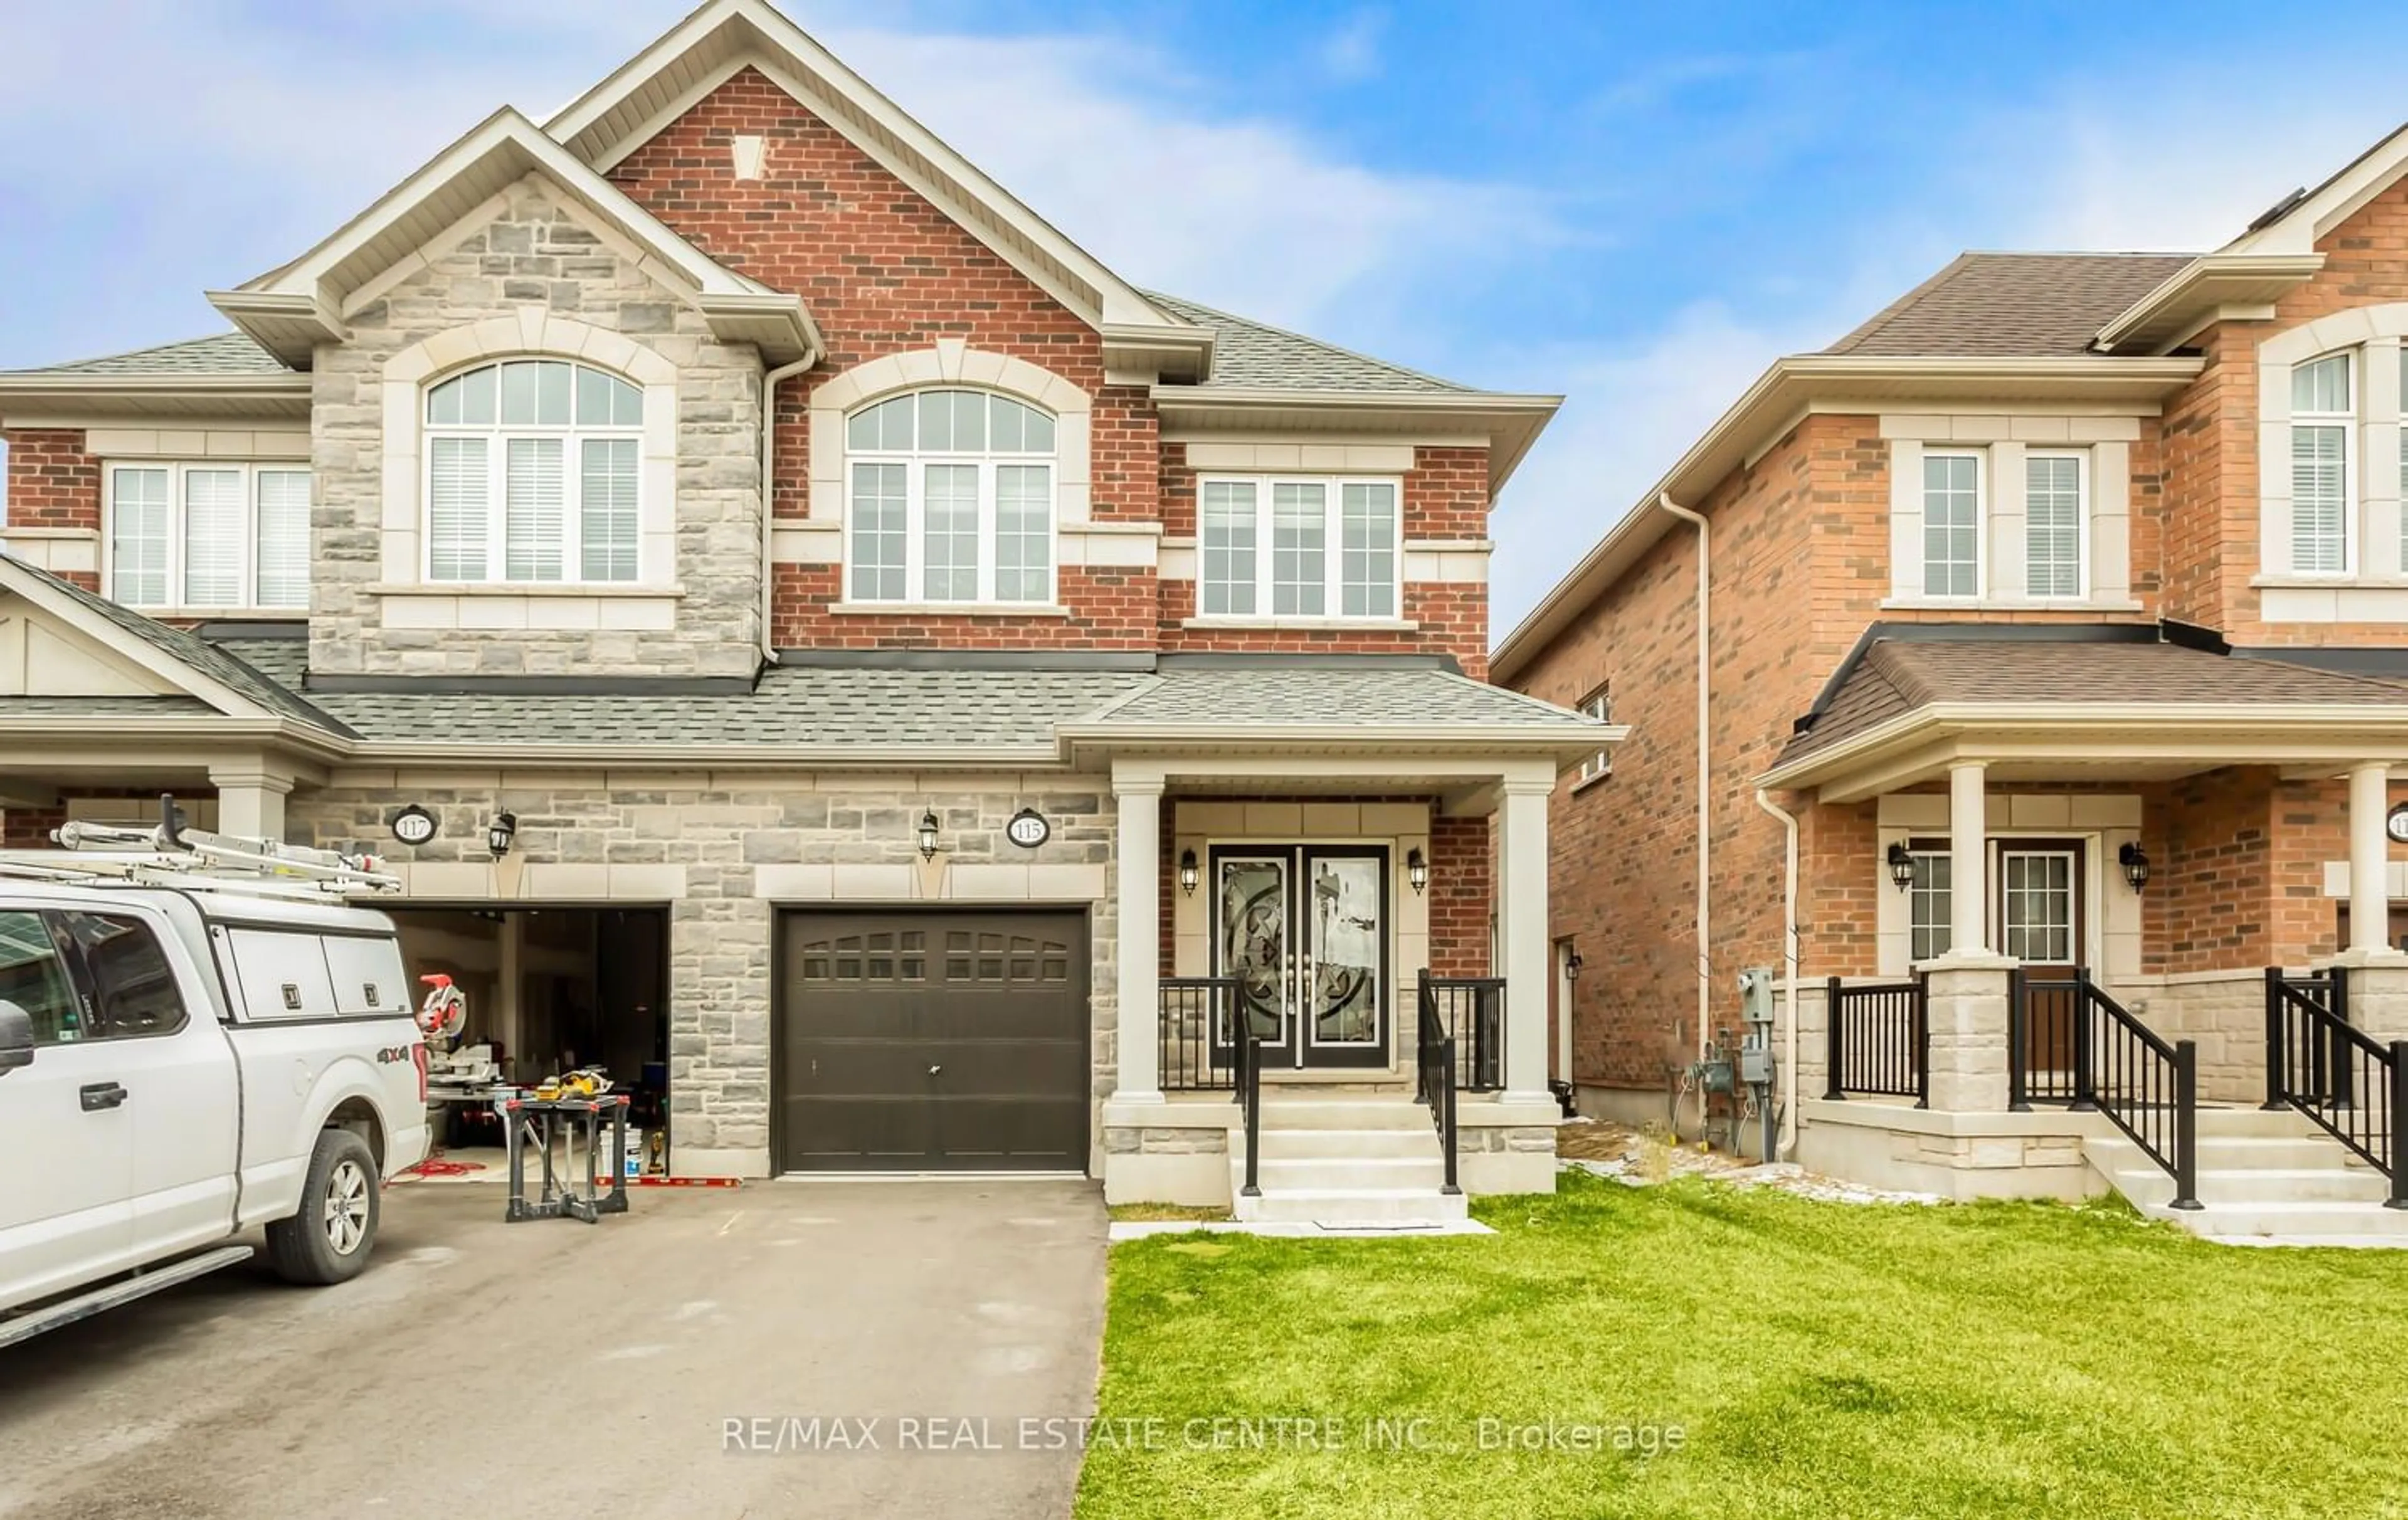 Home with brick exterior material for 115 Branigan Cres, Halton Hills Ontario L7G 0M9